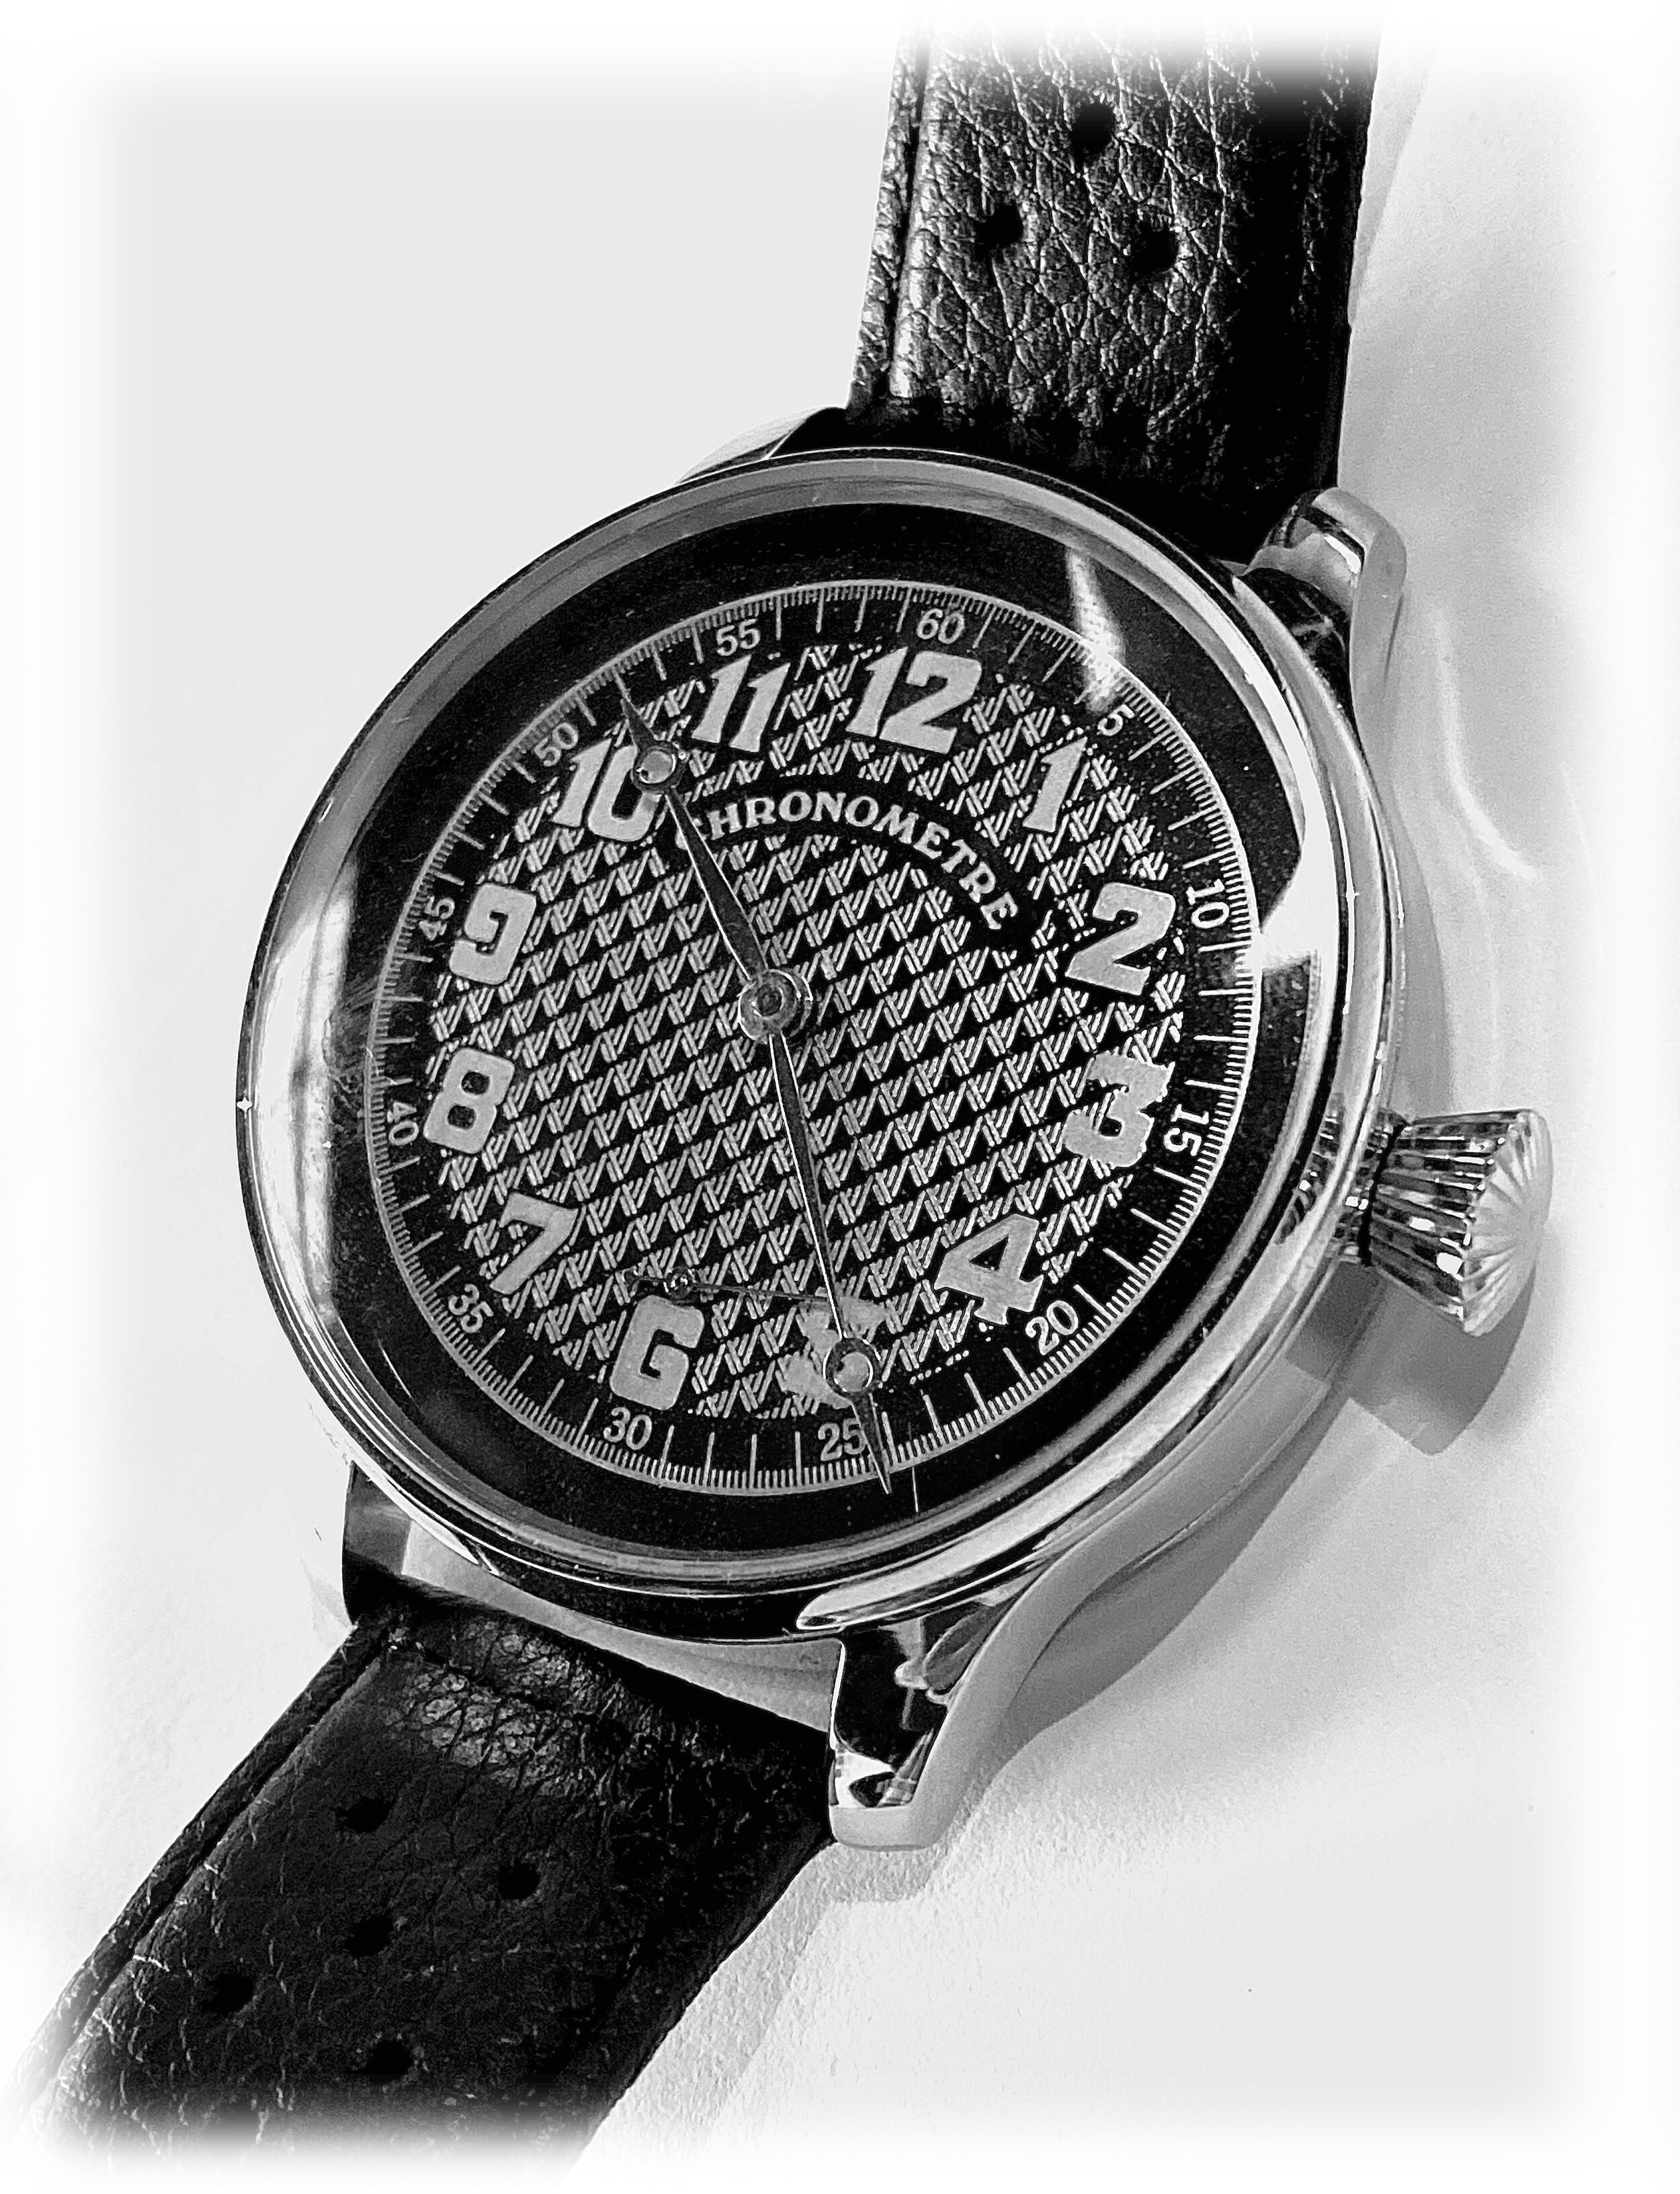 Drusus Chronometre pre-1920s 